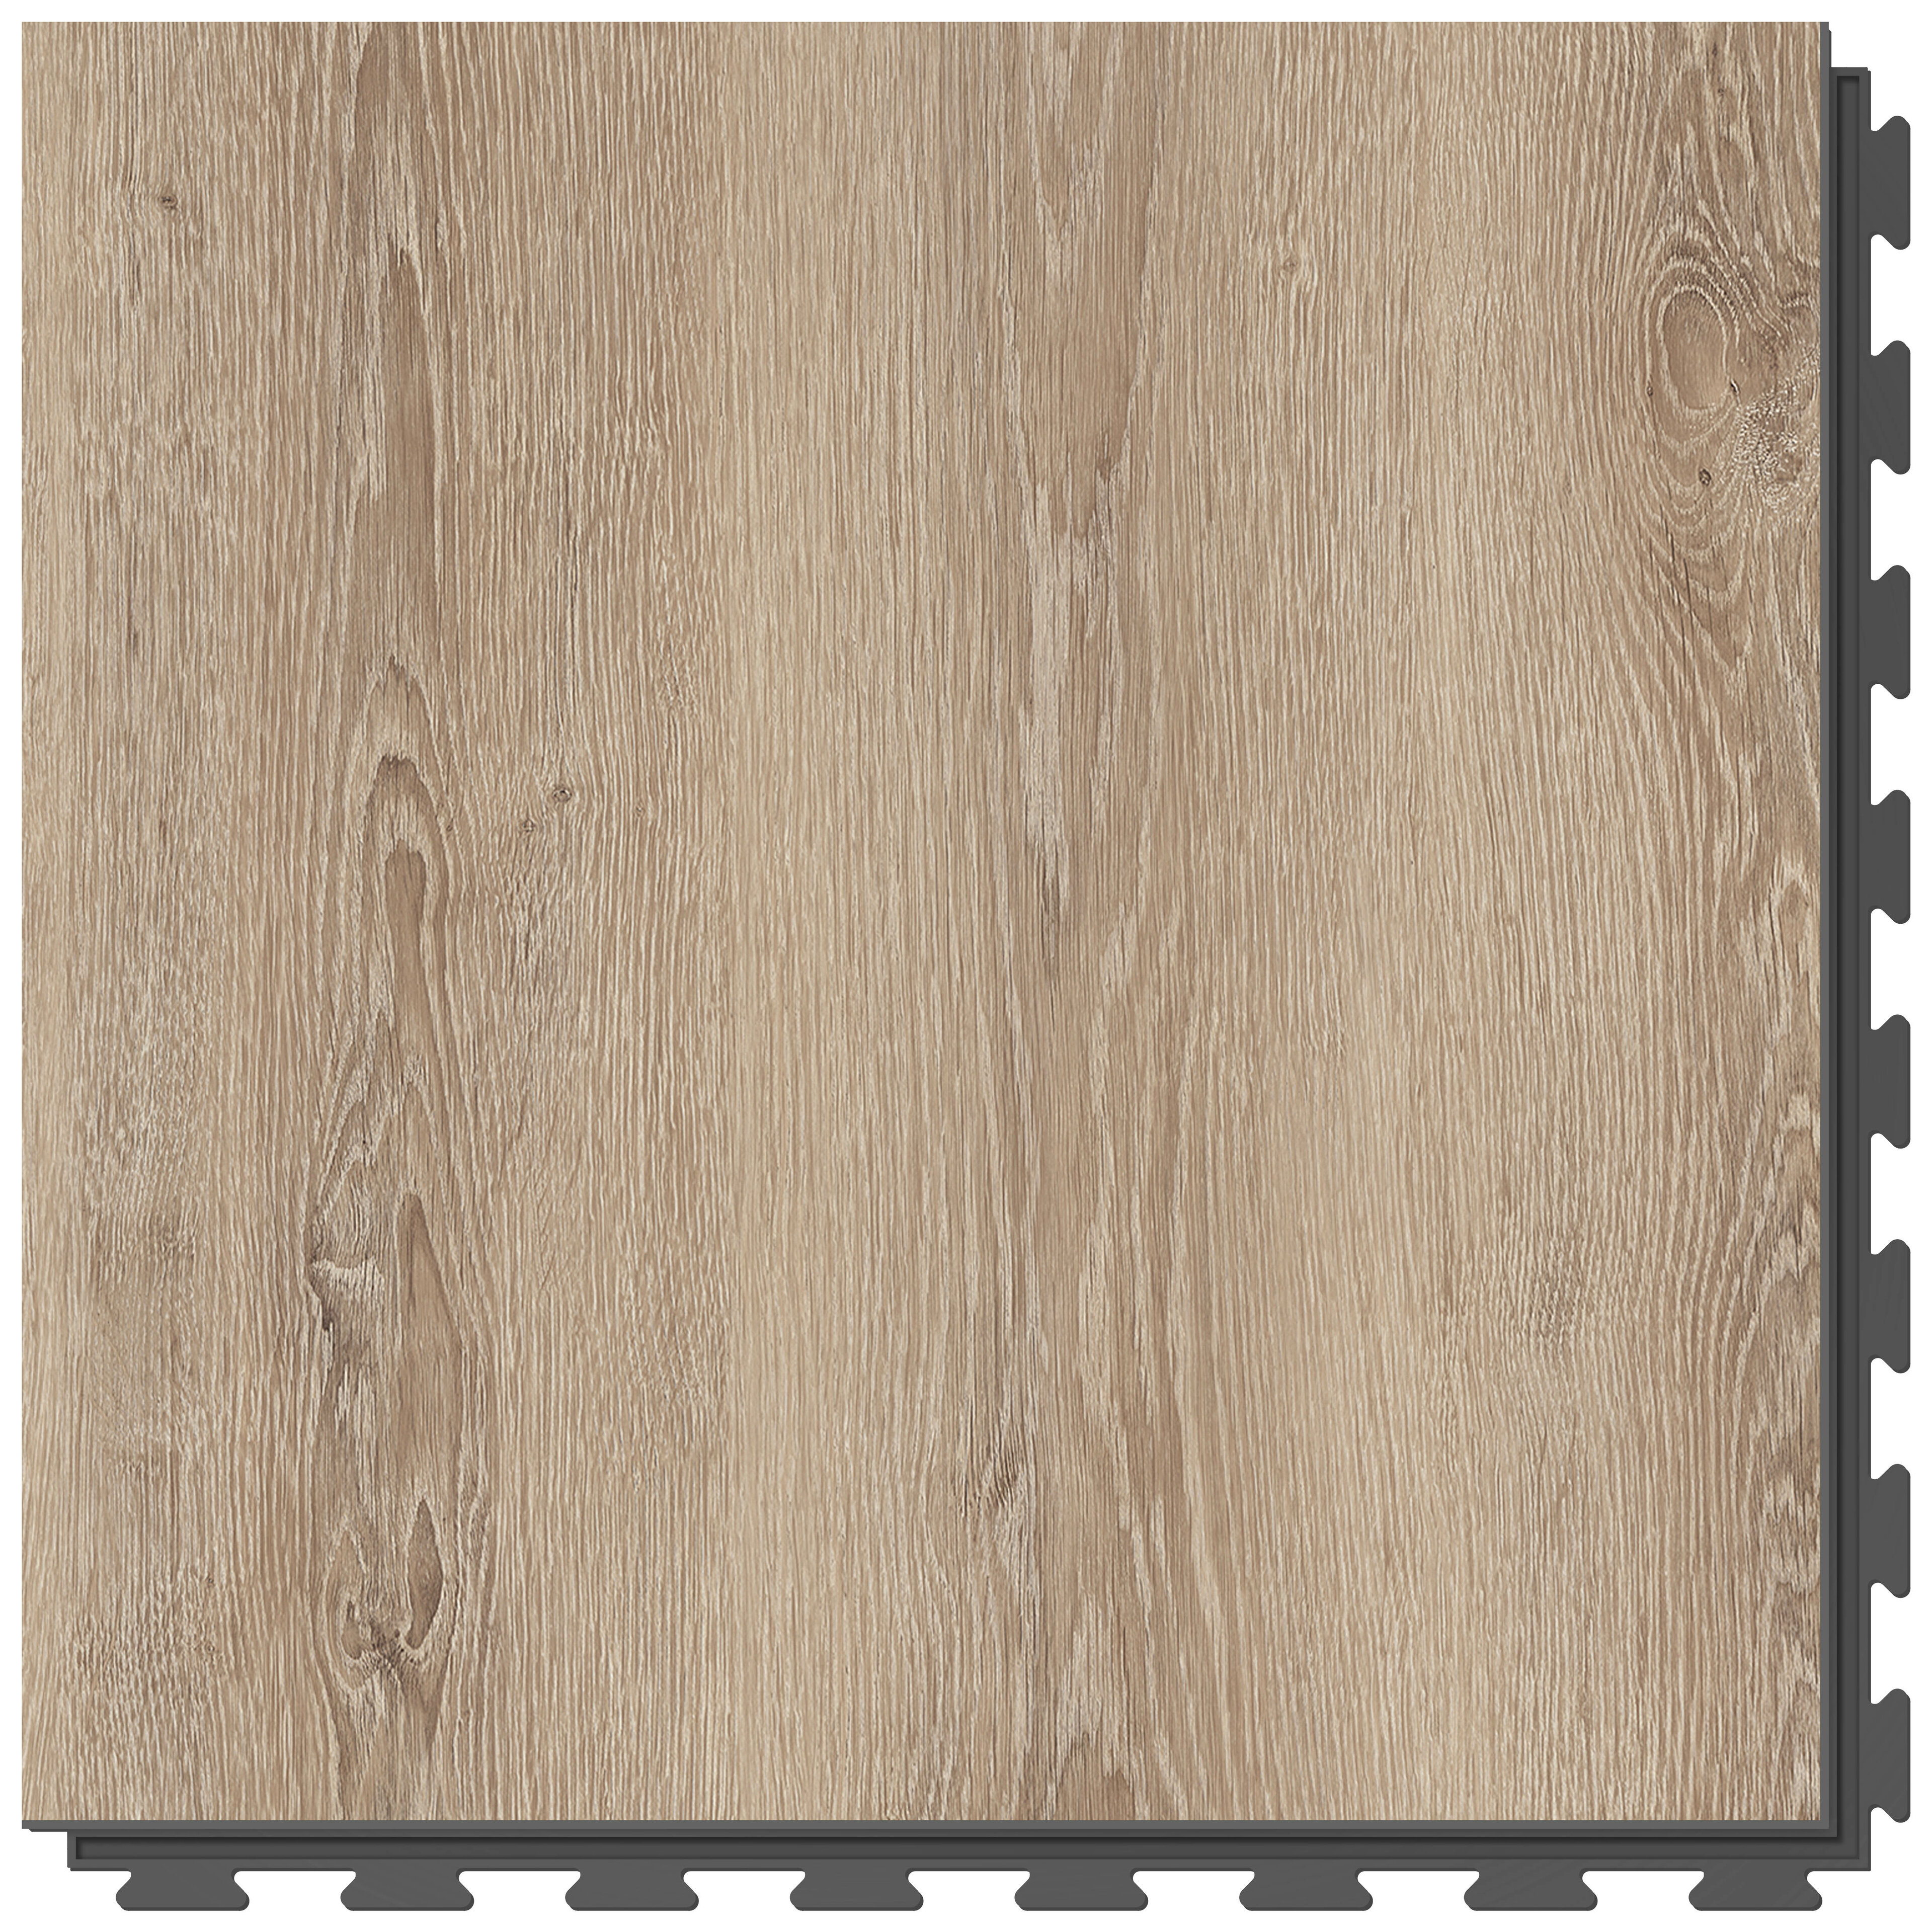 Hnědá vinylová PVC dlaždice Fortelock Business Graphite Tyrolean oak W001 - délka 66,8 cm, šířka 66,8 cm, výška 0,7 cm